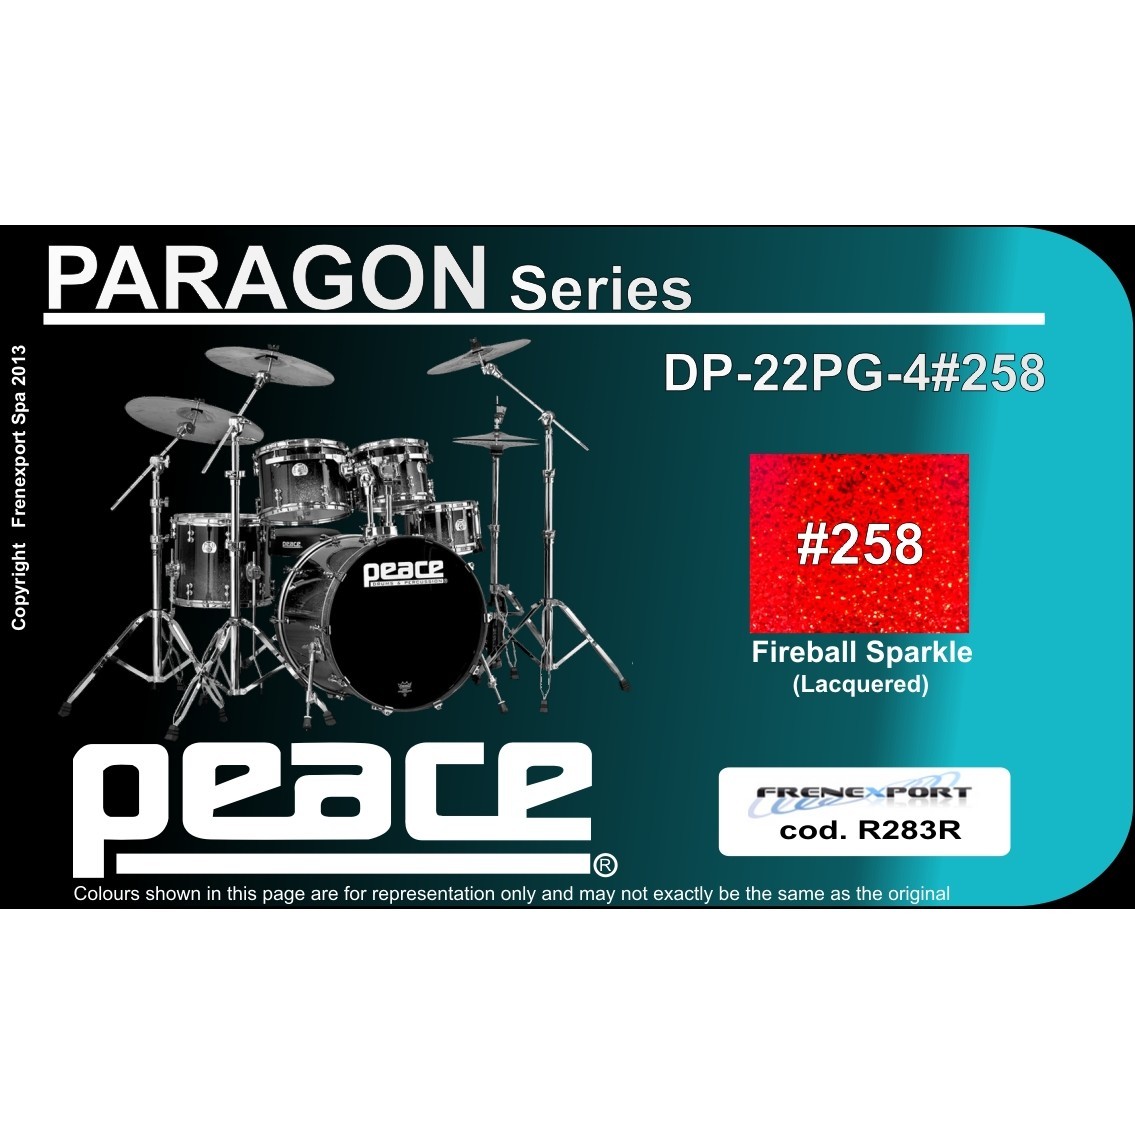 BATTERIA PEACE PARAGON DP-22PG-4-C1 #258 FIREBALL SPARKLE_2